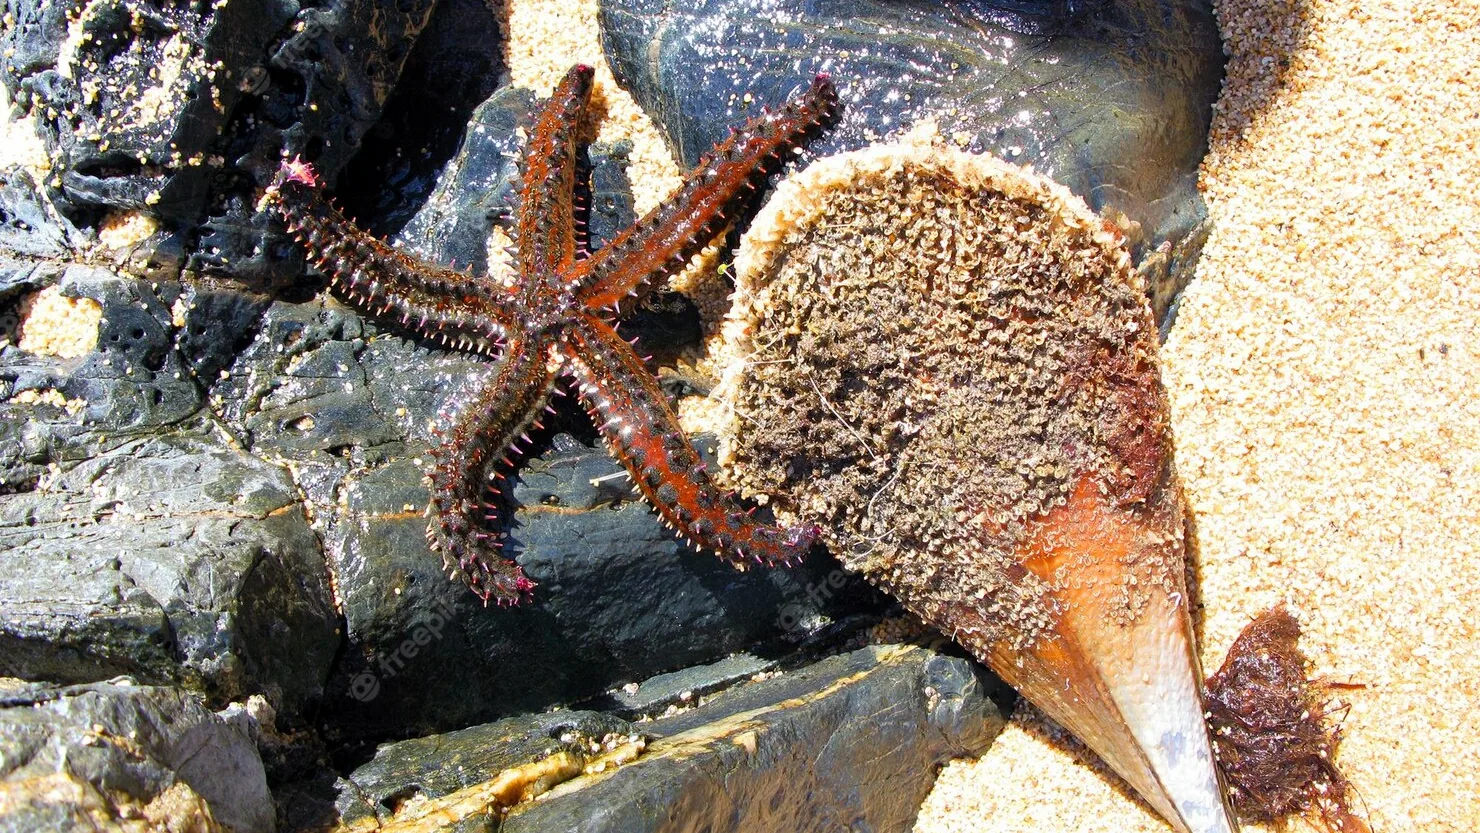 Large Starfish next to a Giant Clam Pinna Nobilis-rocks-near-sea-close-up-marthasterias